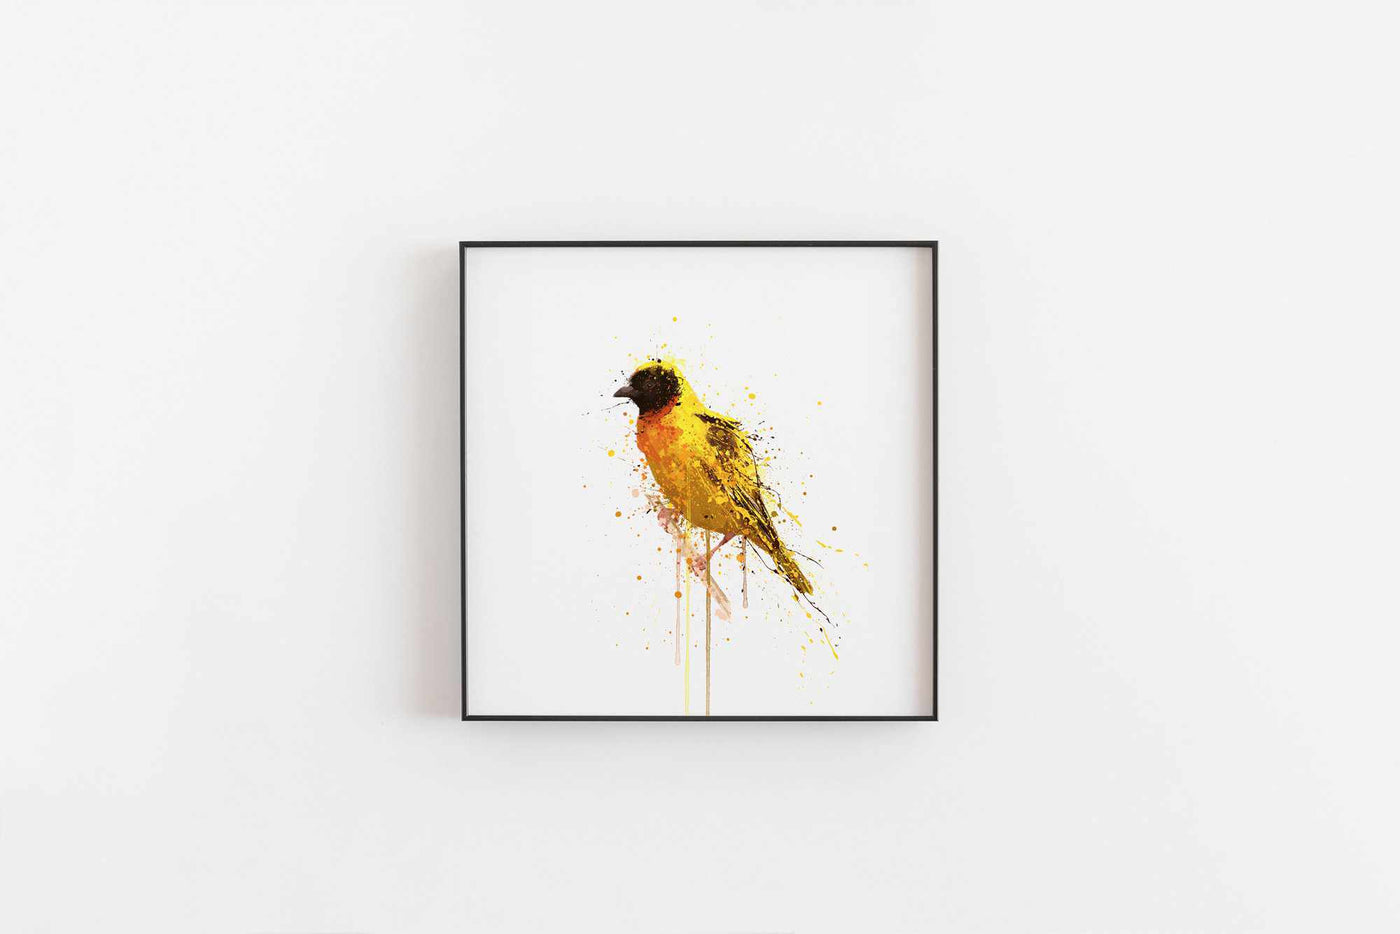 Yellow-Backed Weaver Bird Wall Art Print